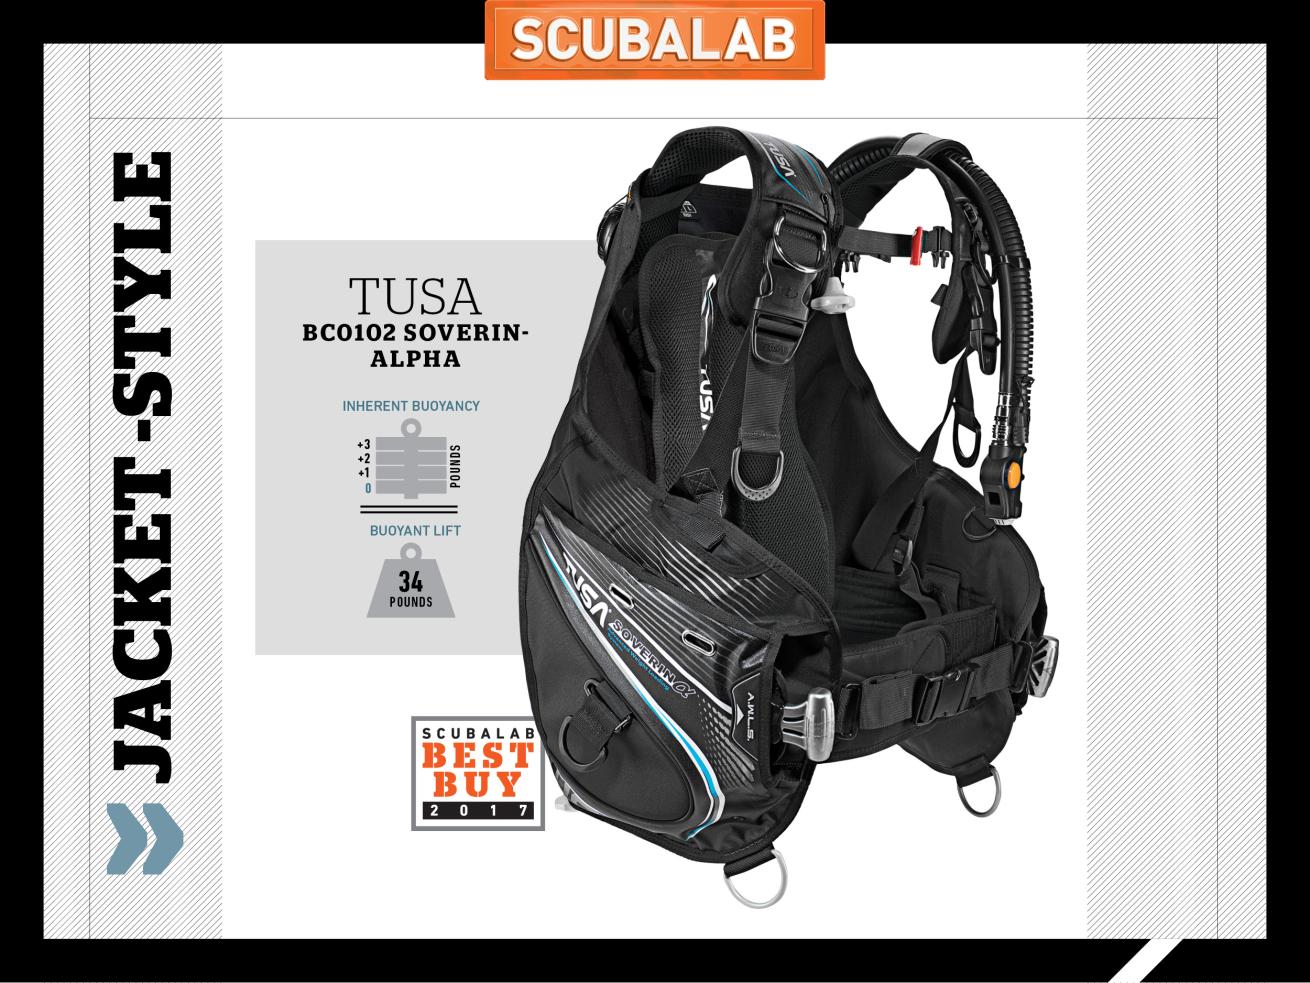 Tusa BC0102 Soverin-Alpha scuba diving BC ScubaLab review